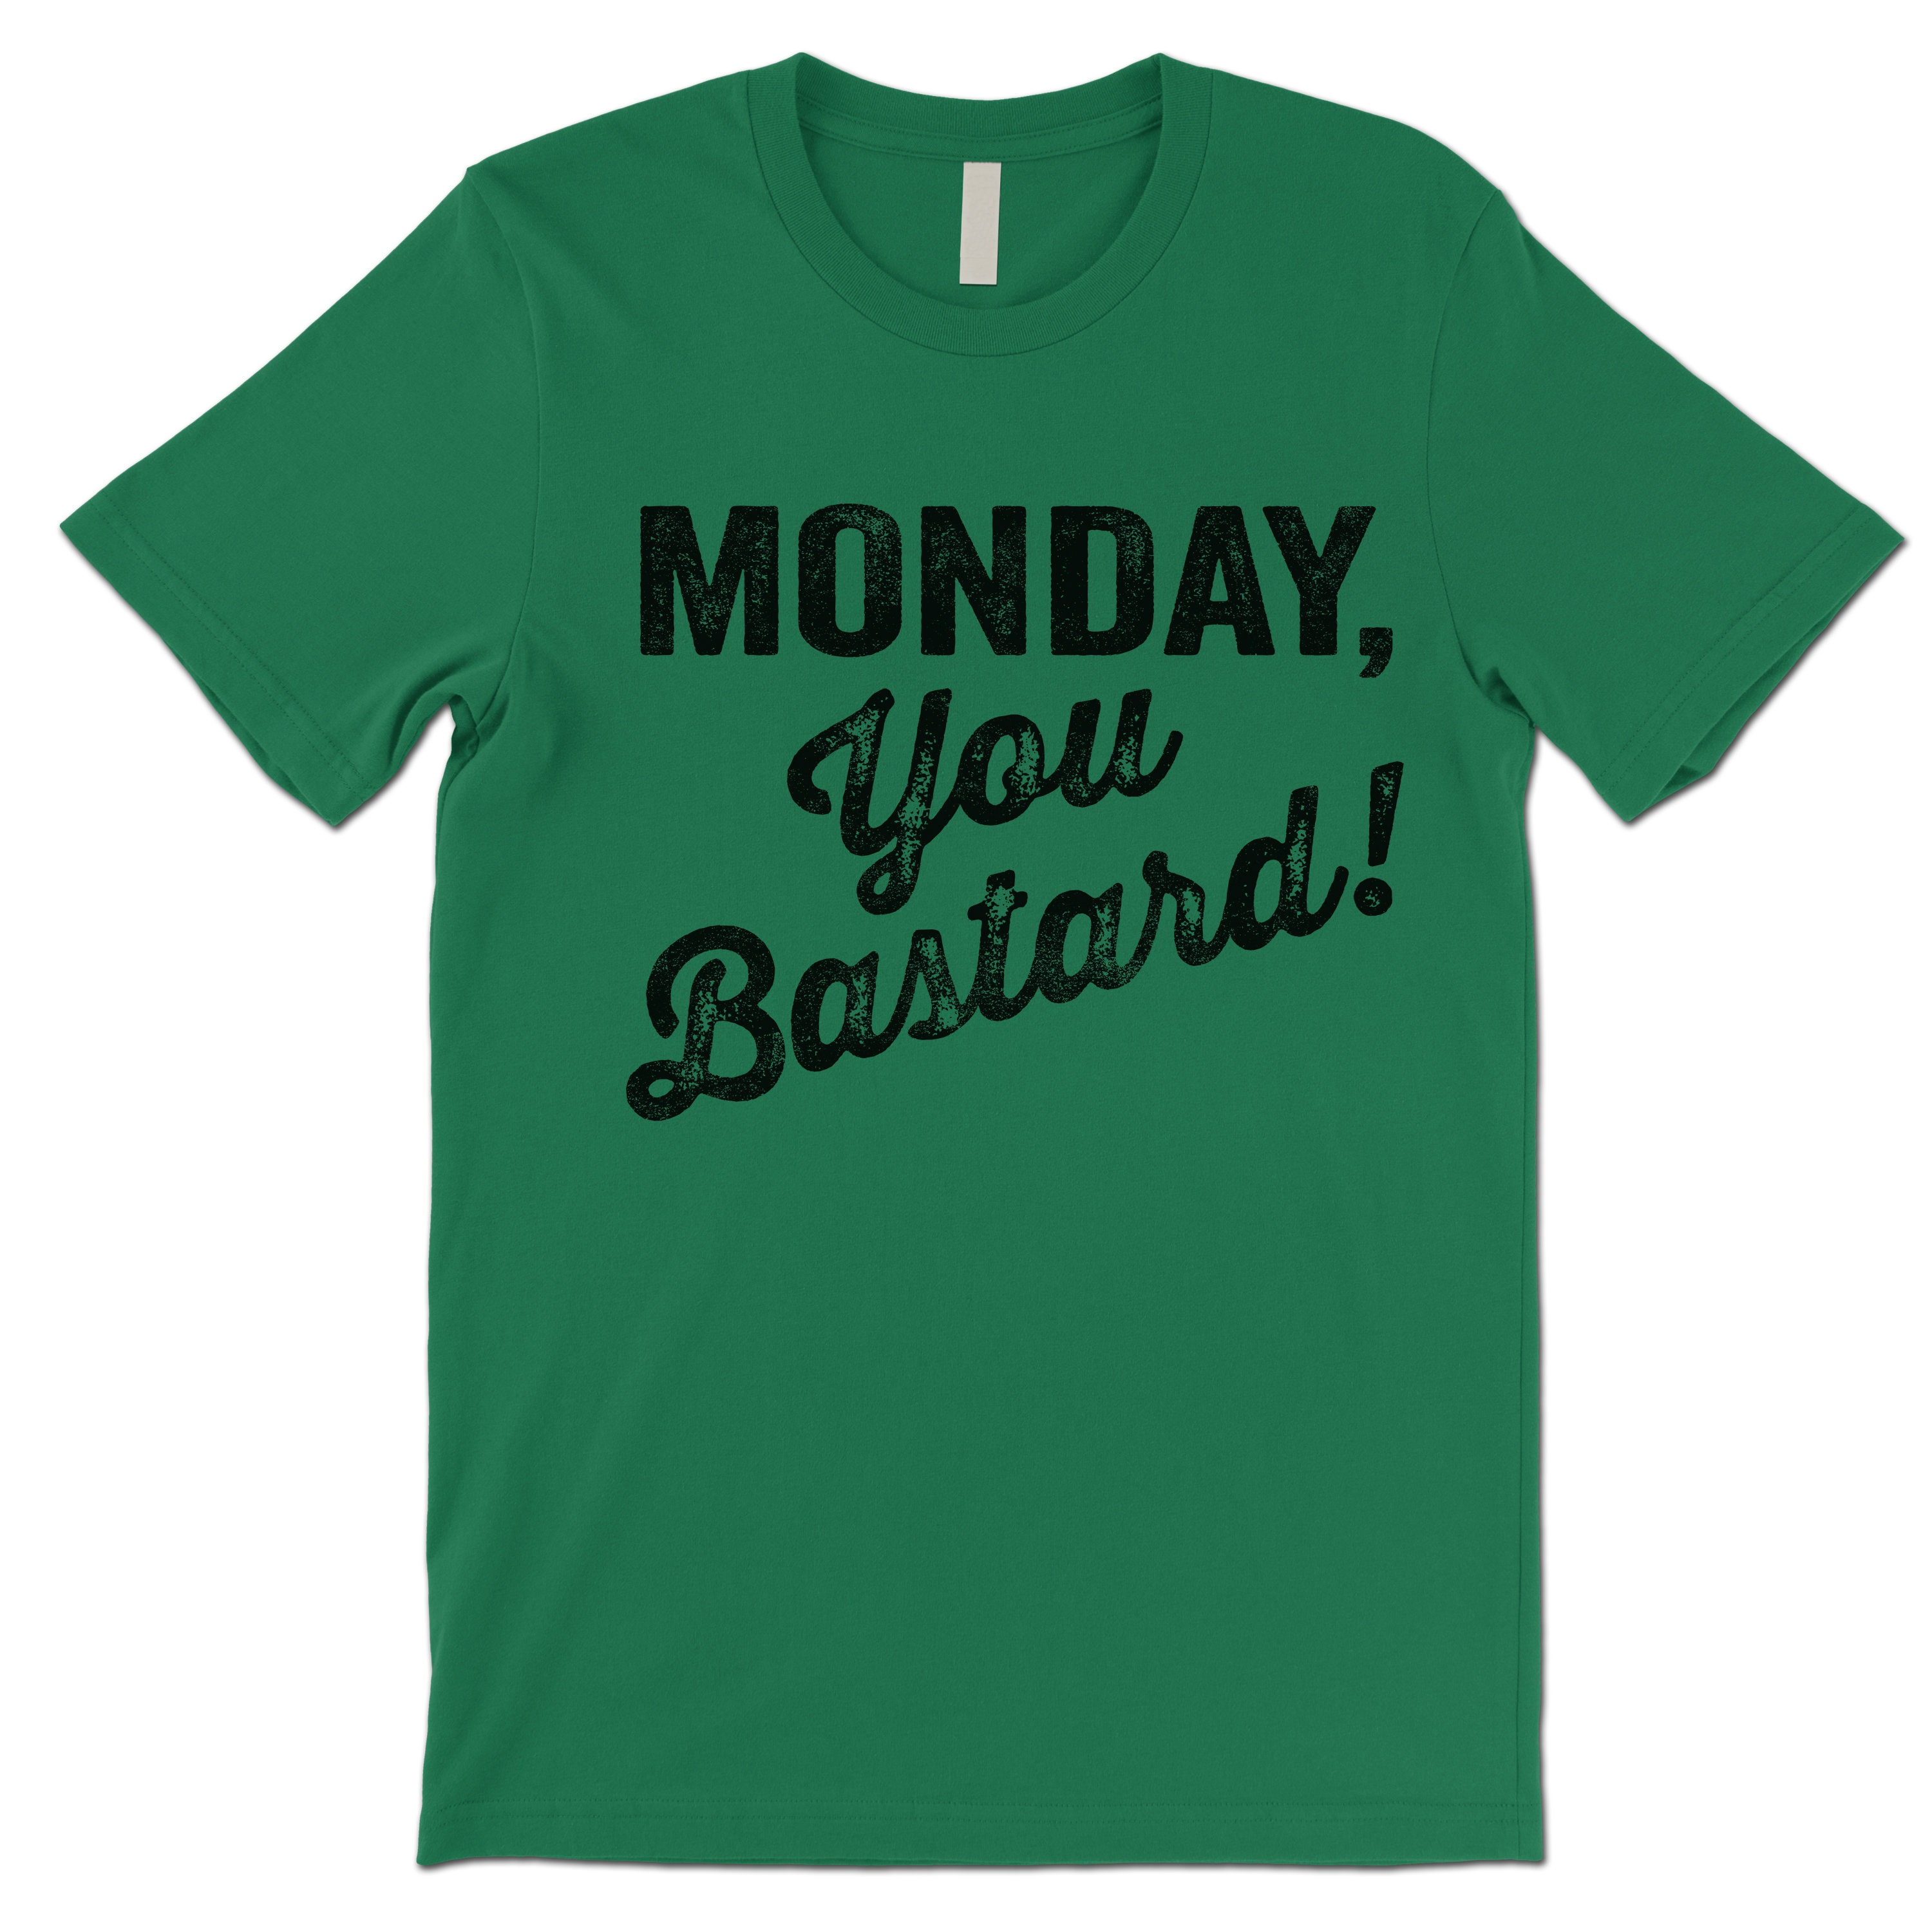 Monday funny womens shirt funny Monday shirt you bastard shirt funny shirt hate Mondays shirt Mondays suck shirt,